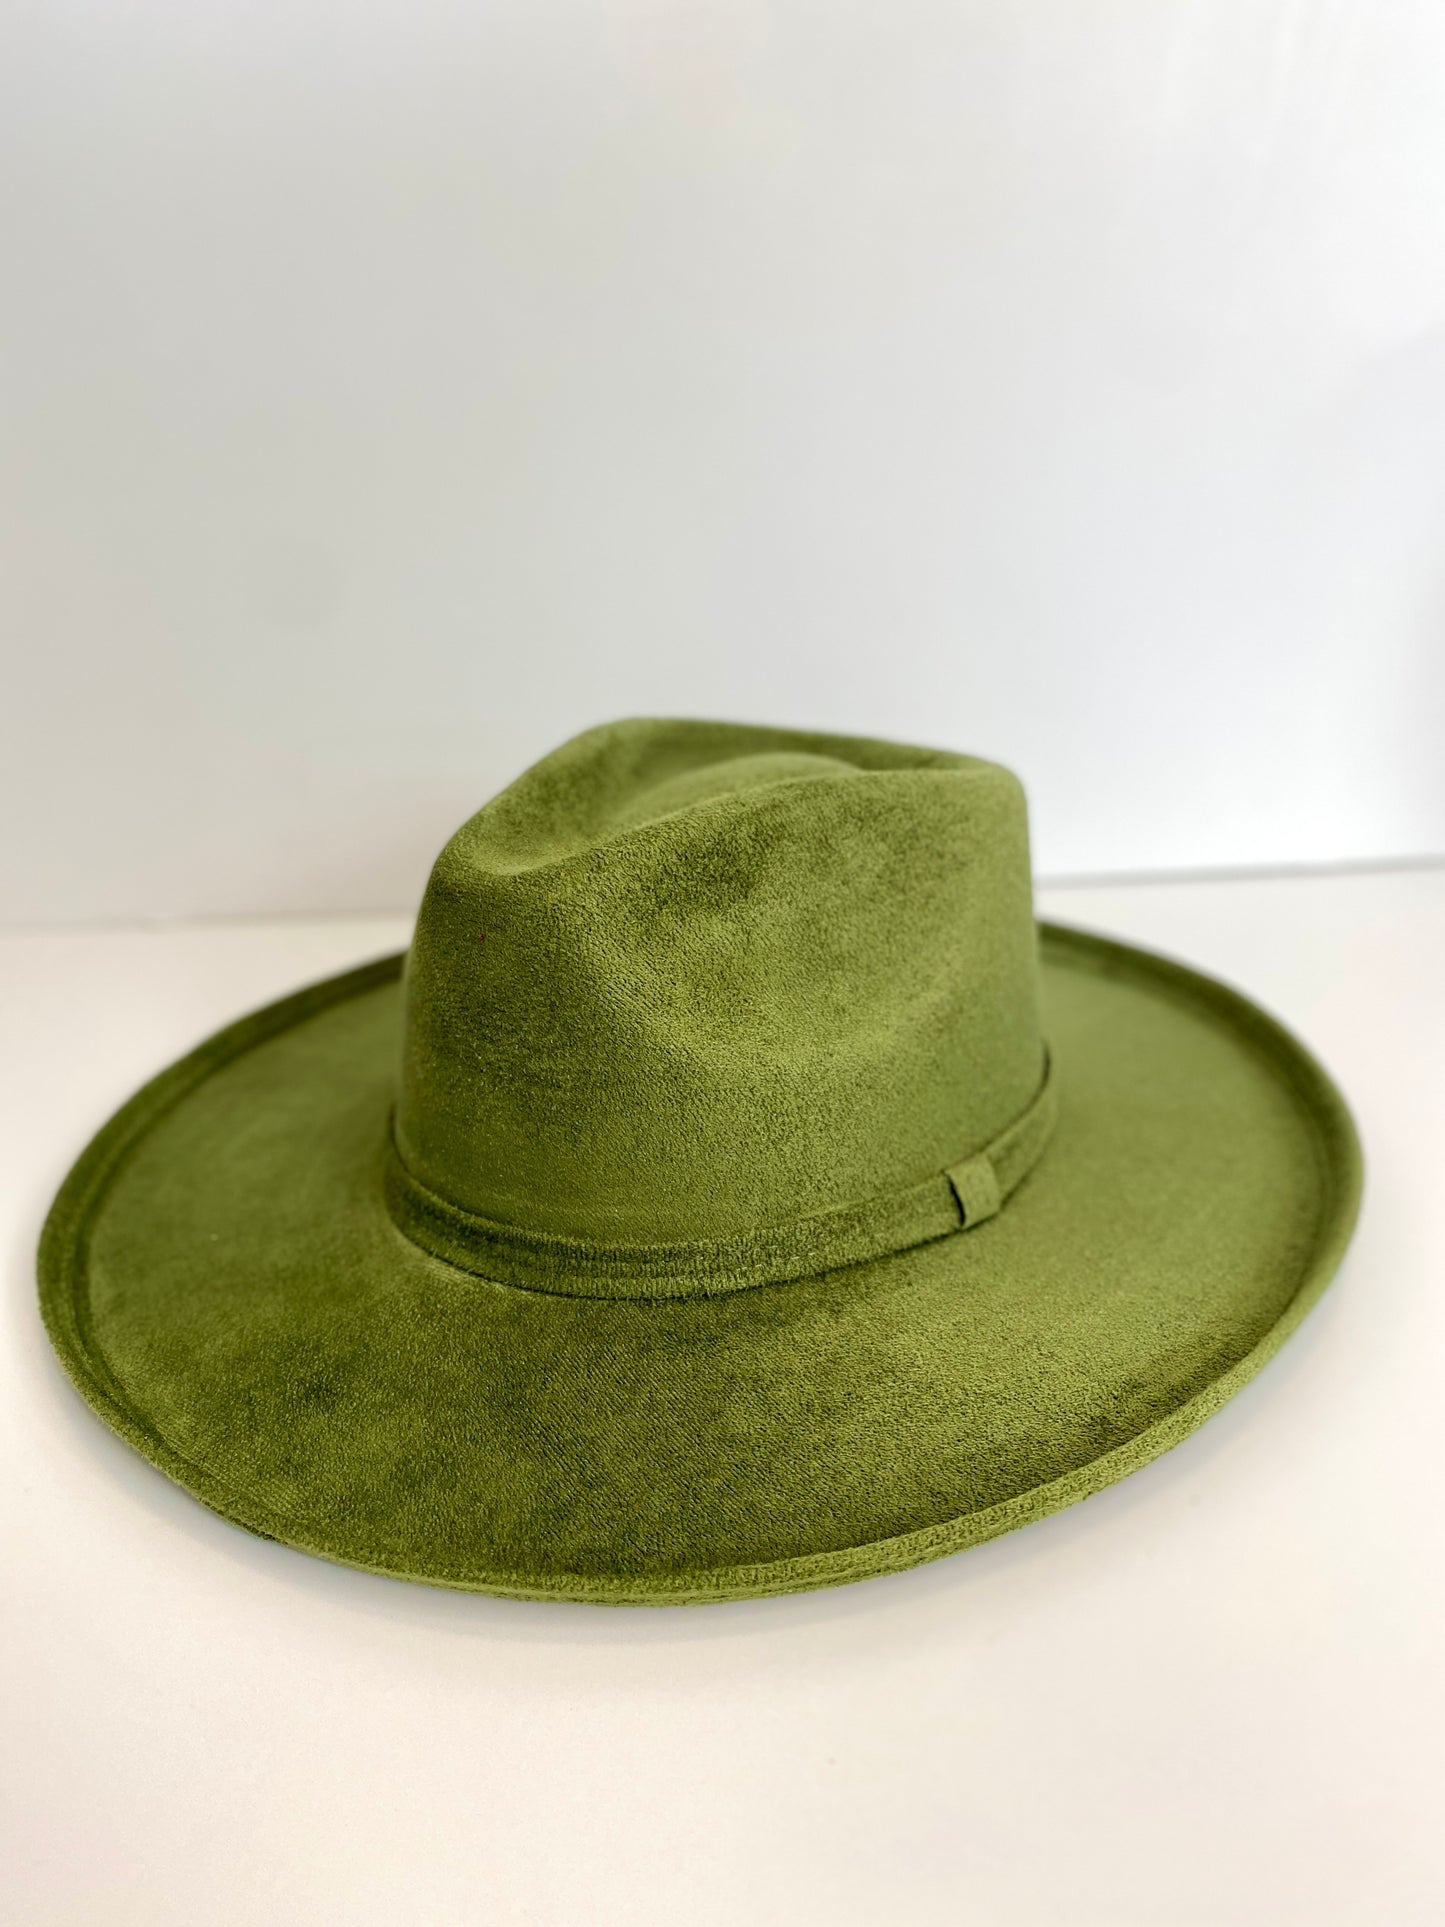 Vegan Suede Rancher Hat - Pencil Brim - Forest Green